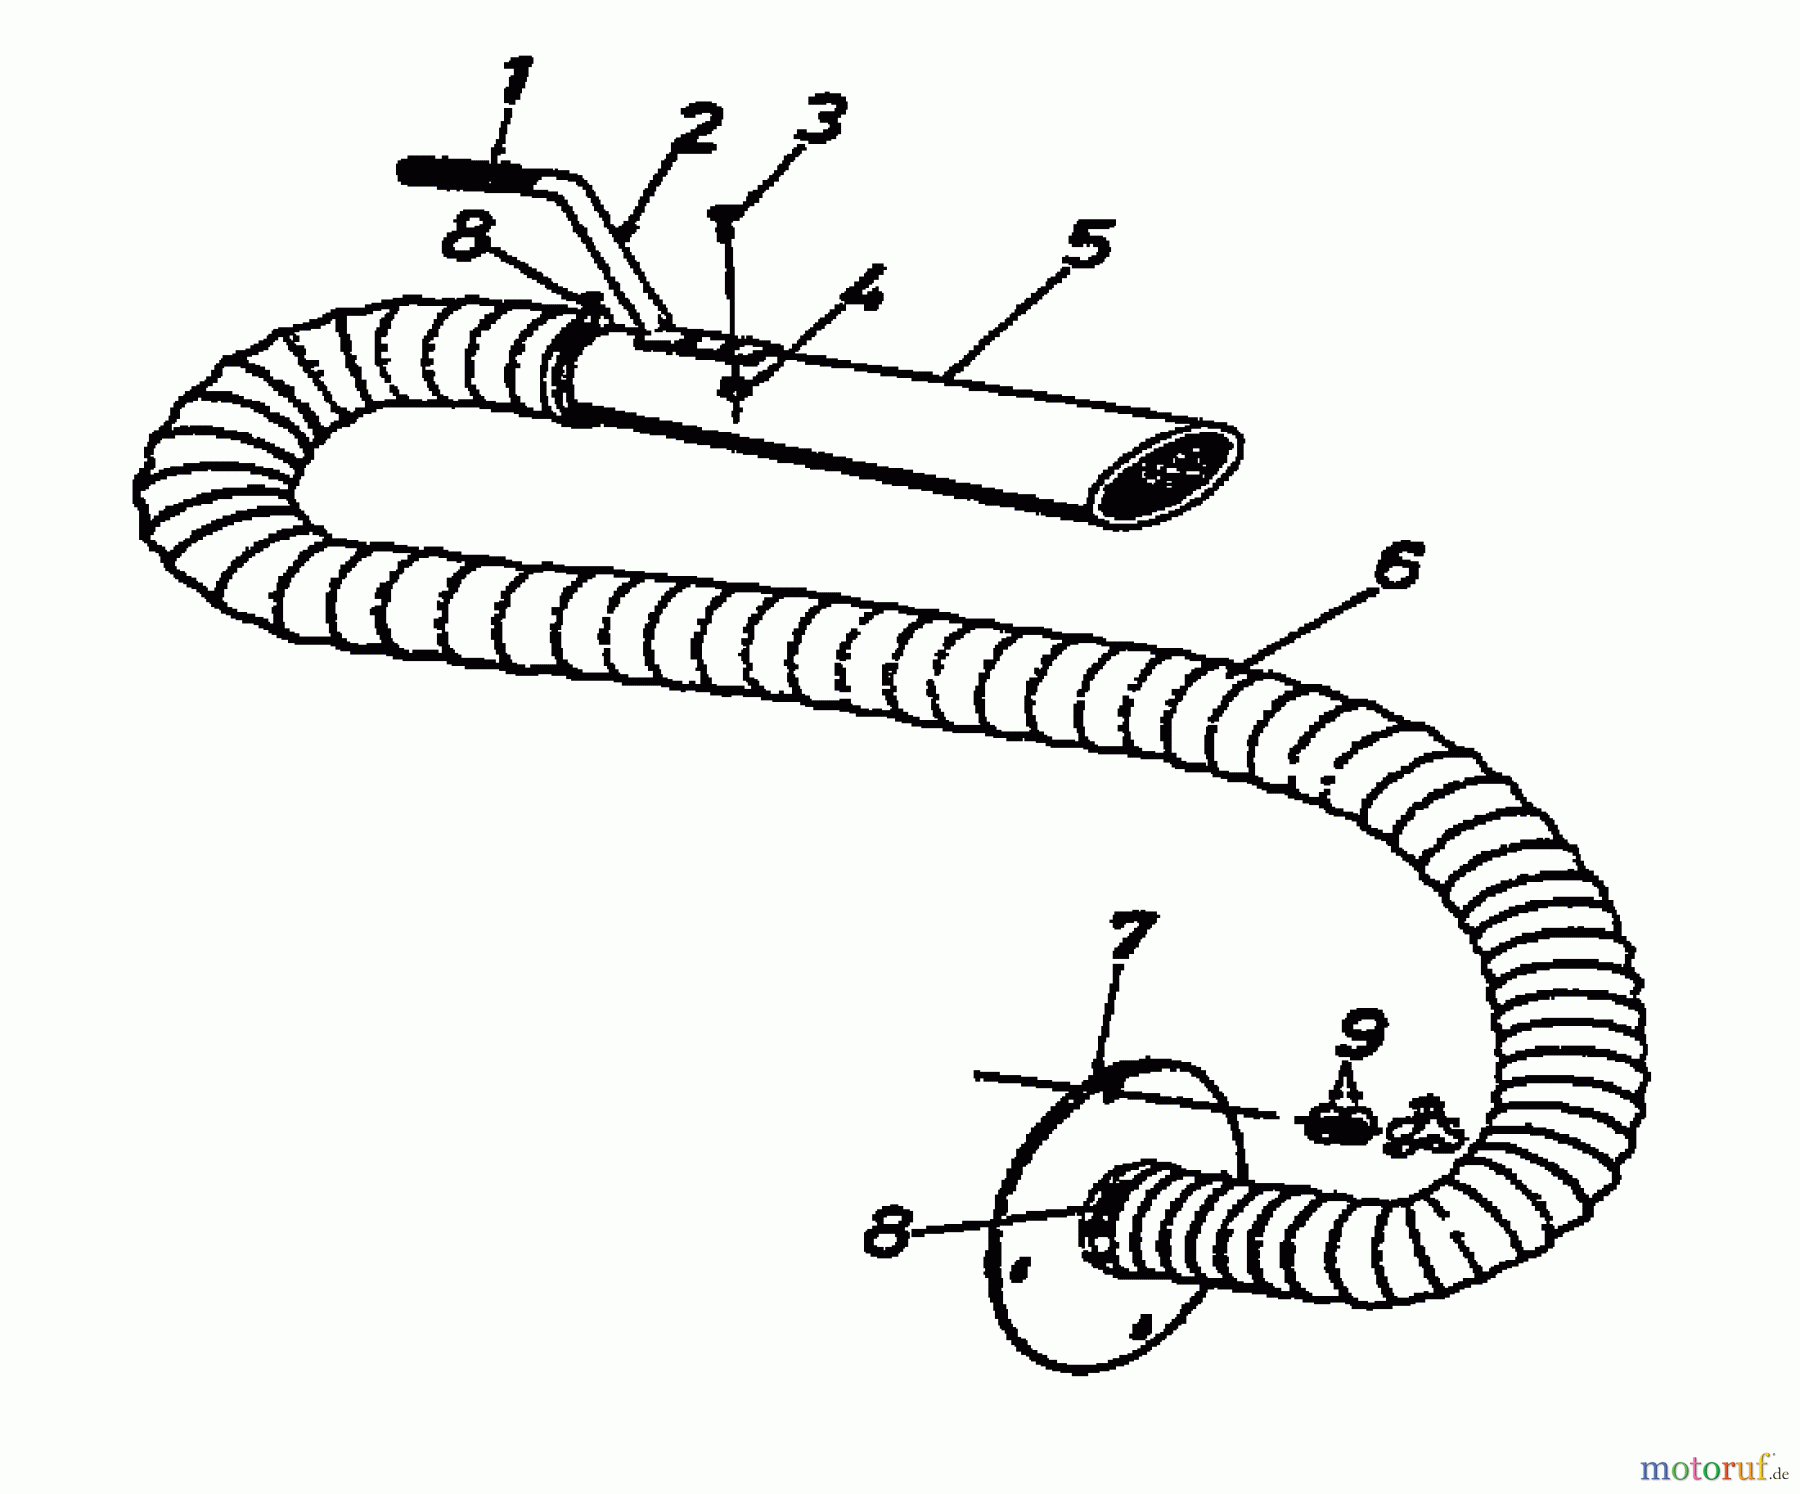  MTD Leaf blower, Blower vac 685 244-685-000  (1984) Vaccum hose